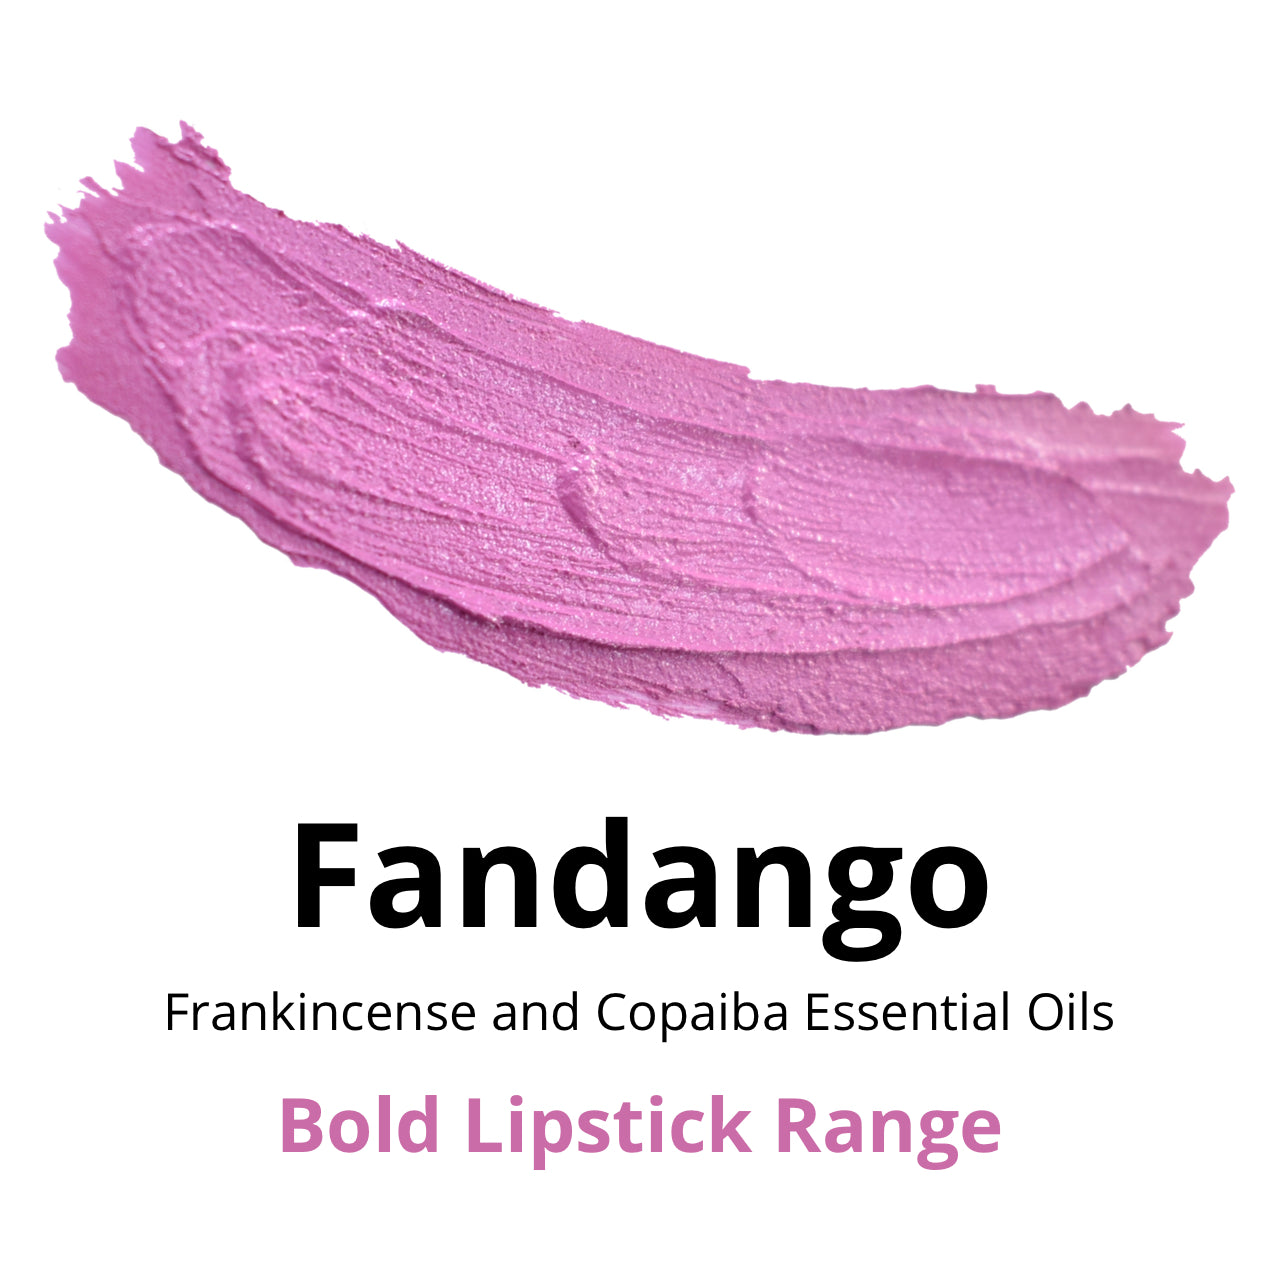 Fandango Lipstick